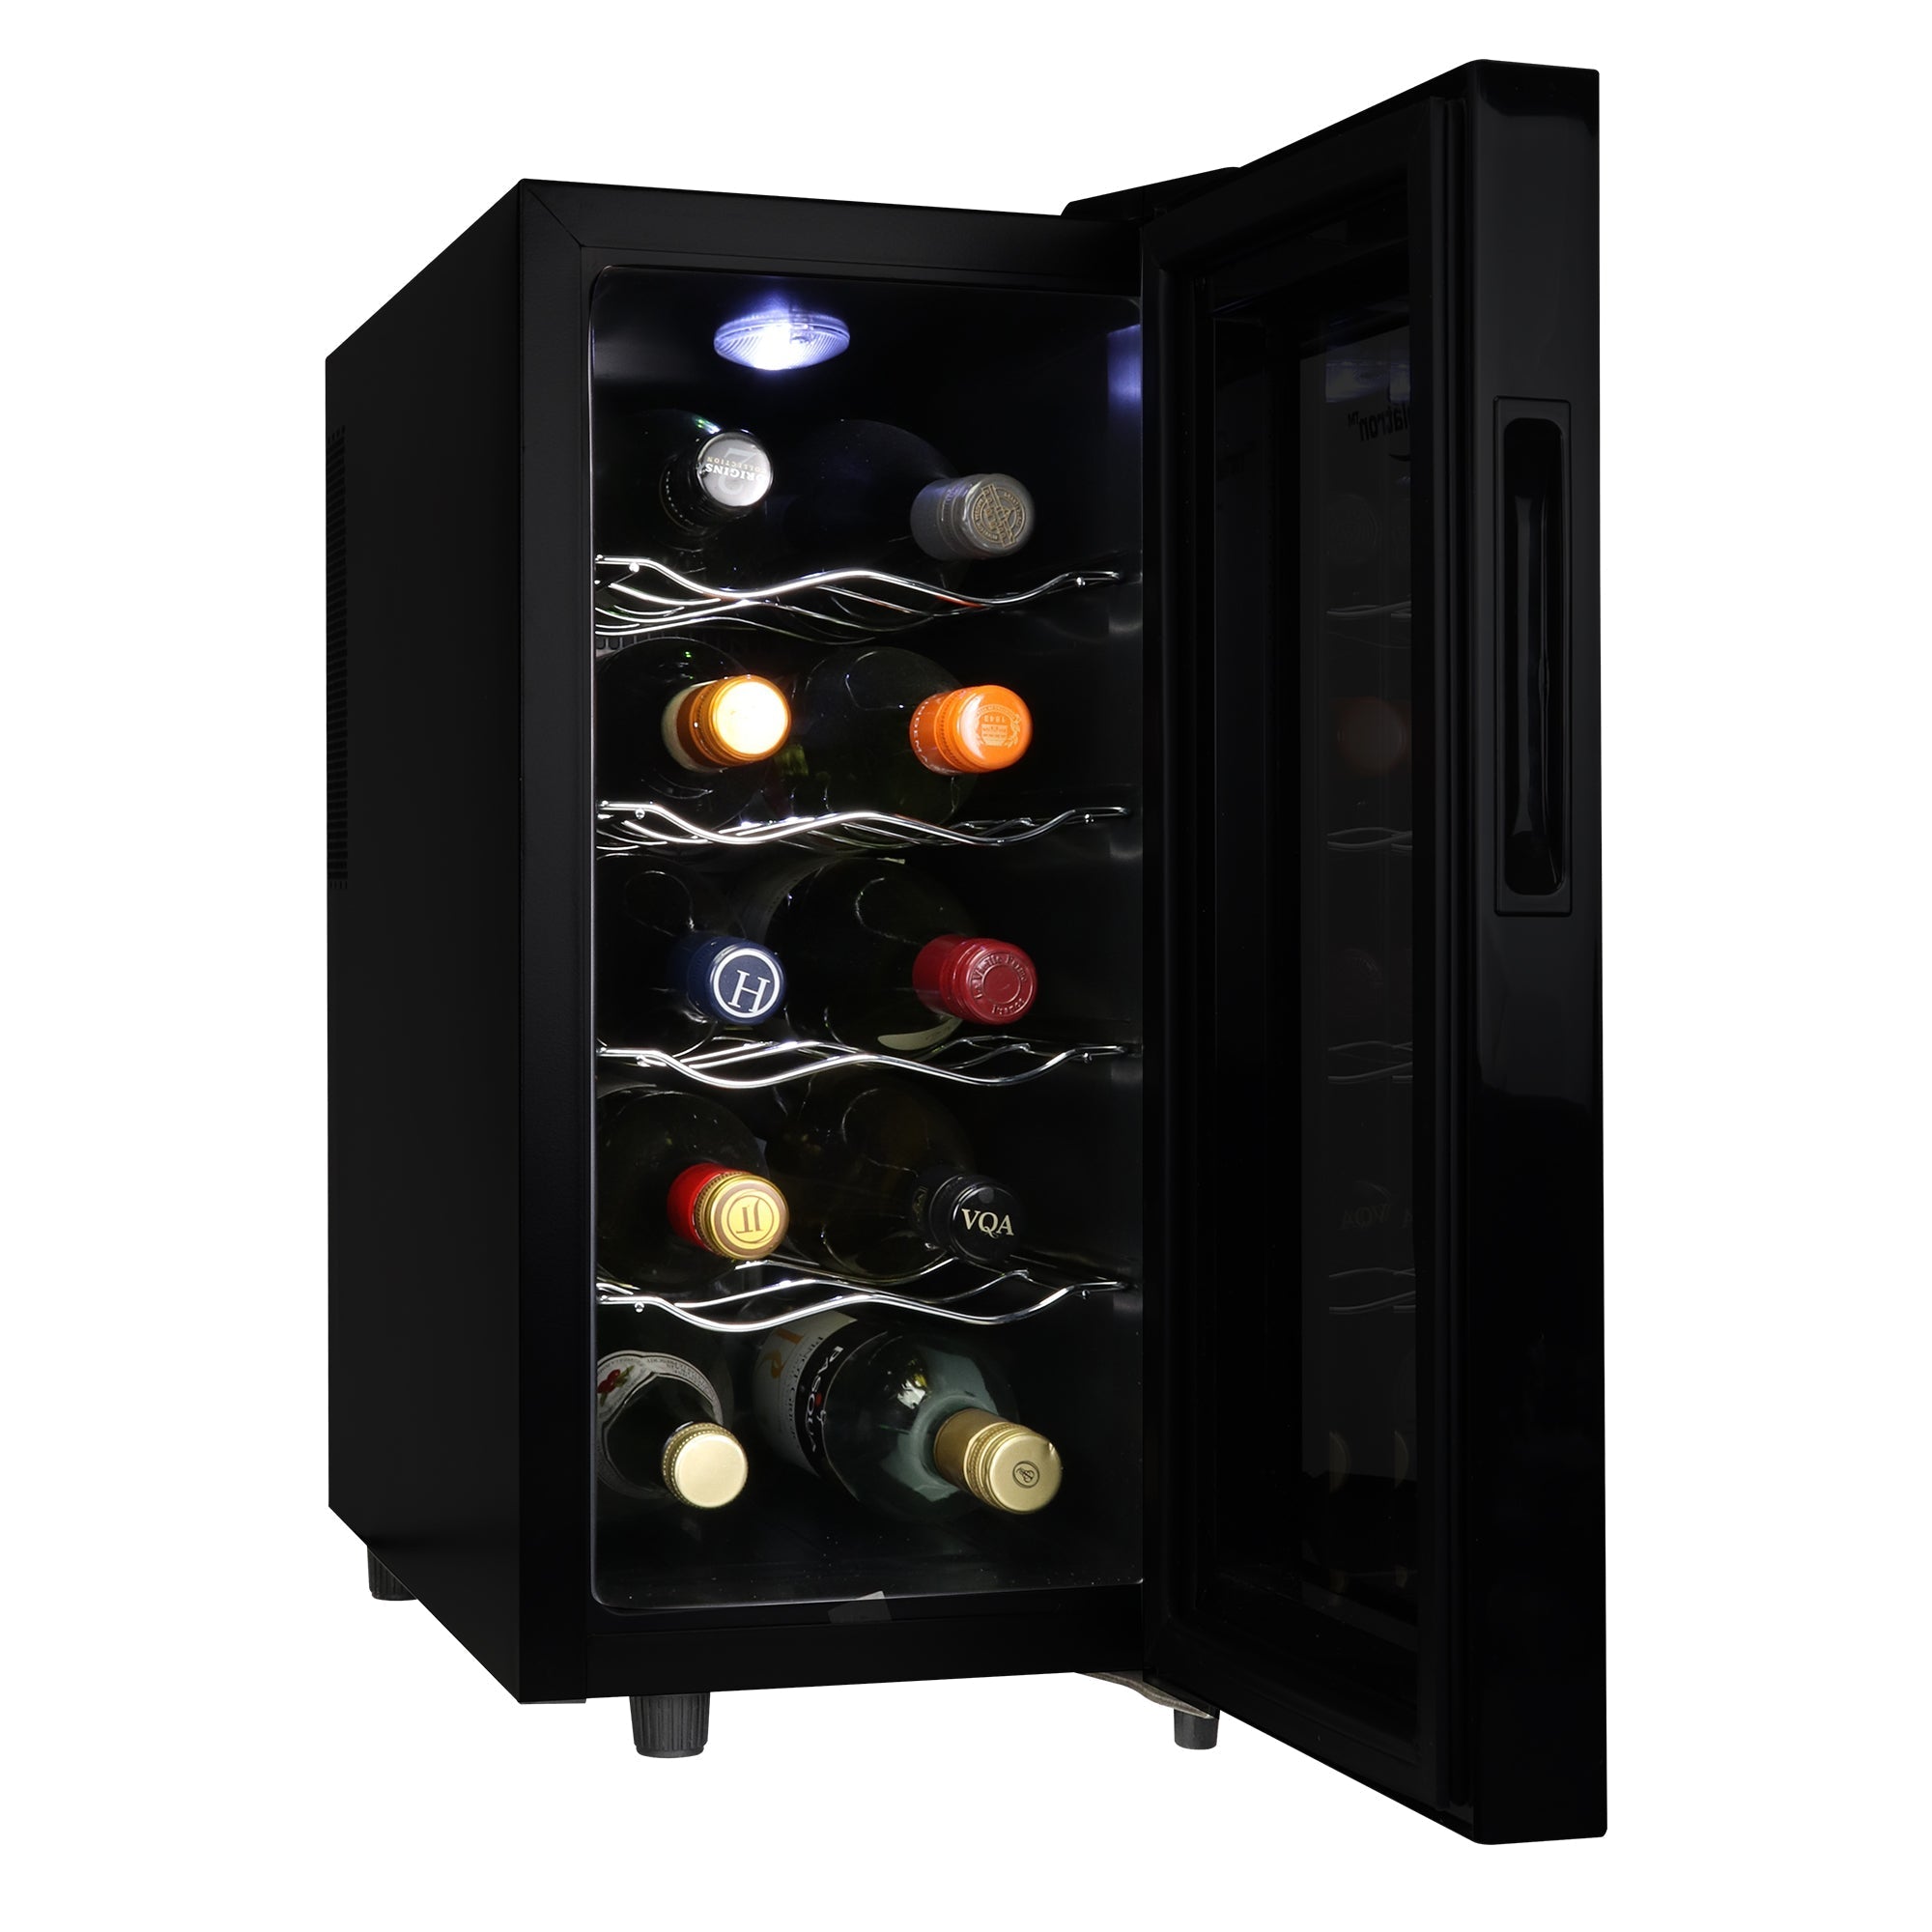 Koolatron 10 bottle wine cooler, open with bottles of wine inside, on a white background